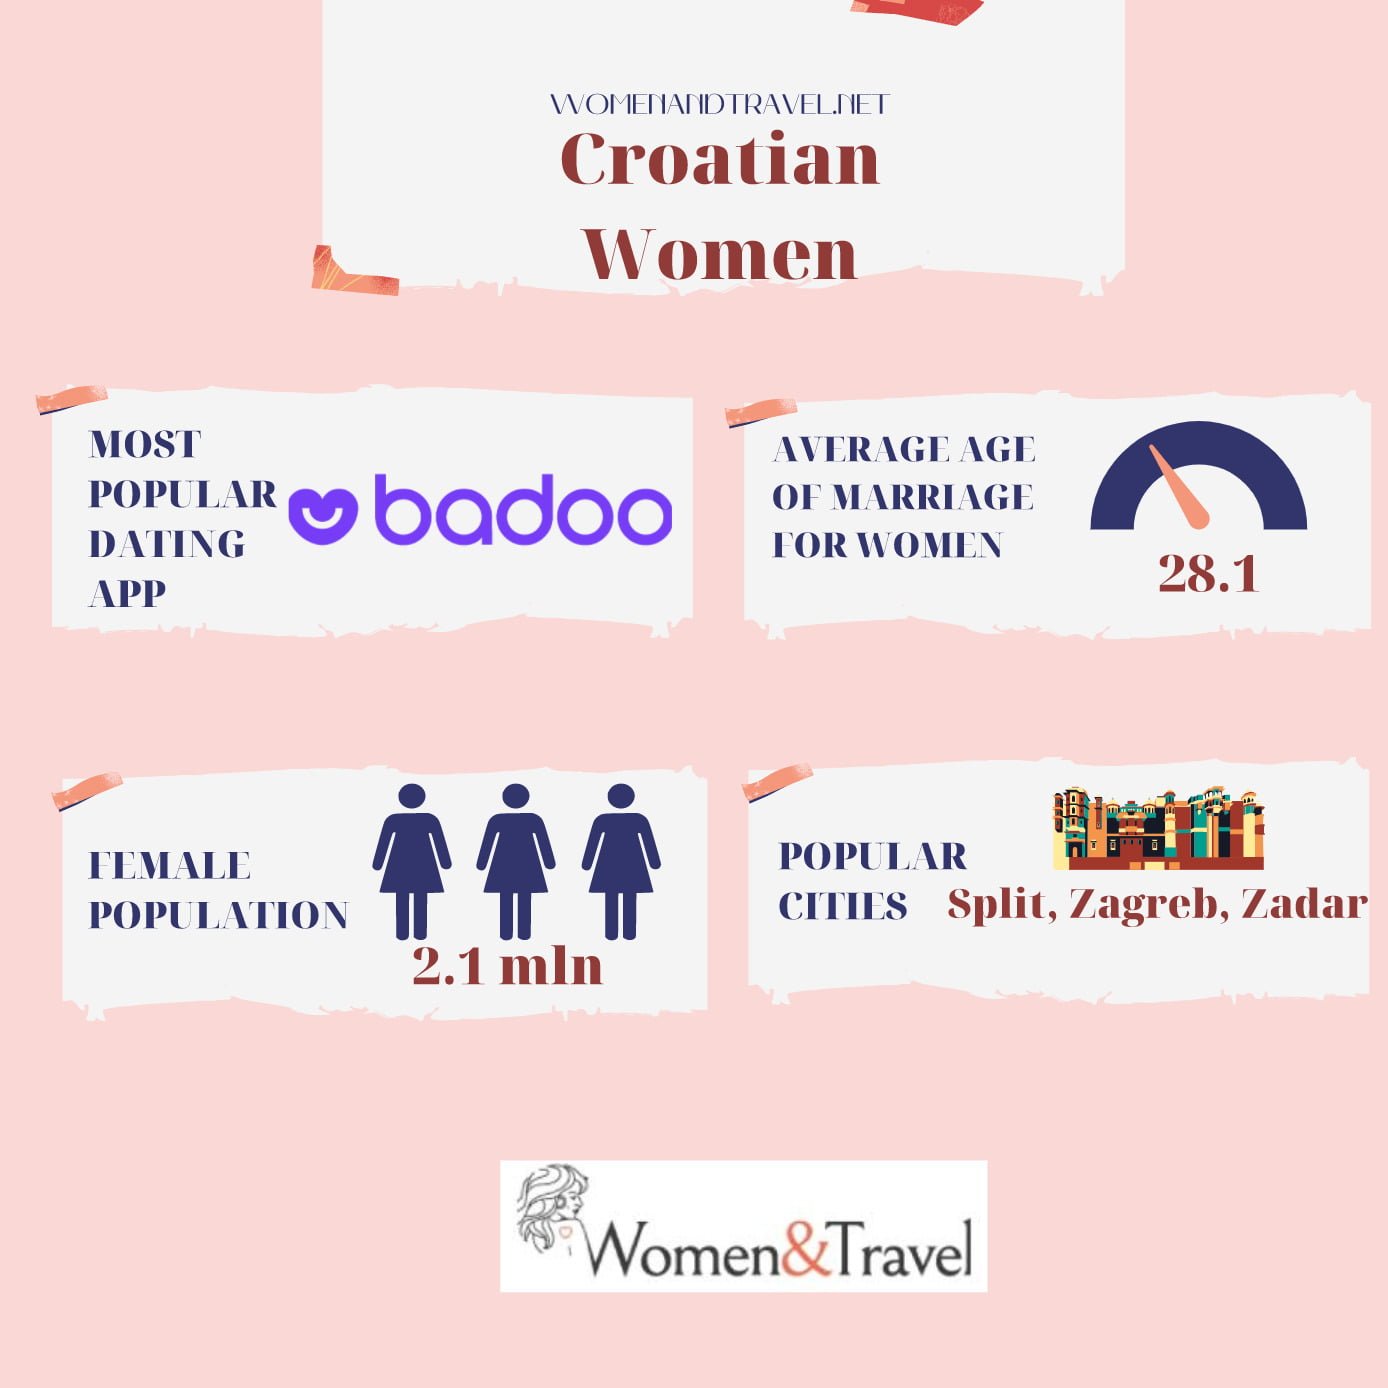 Dating croatia online Croatian Women: